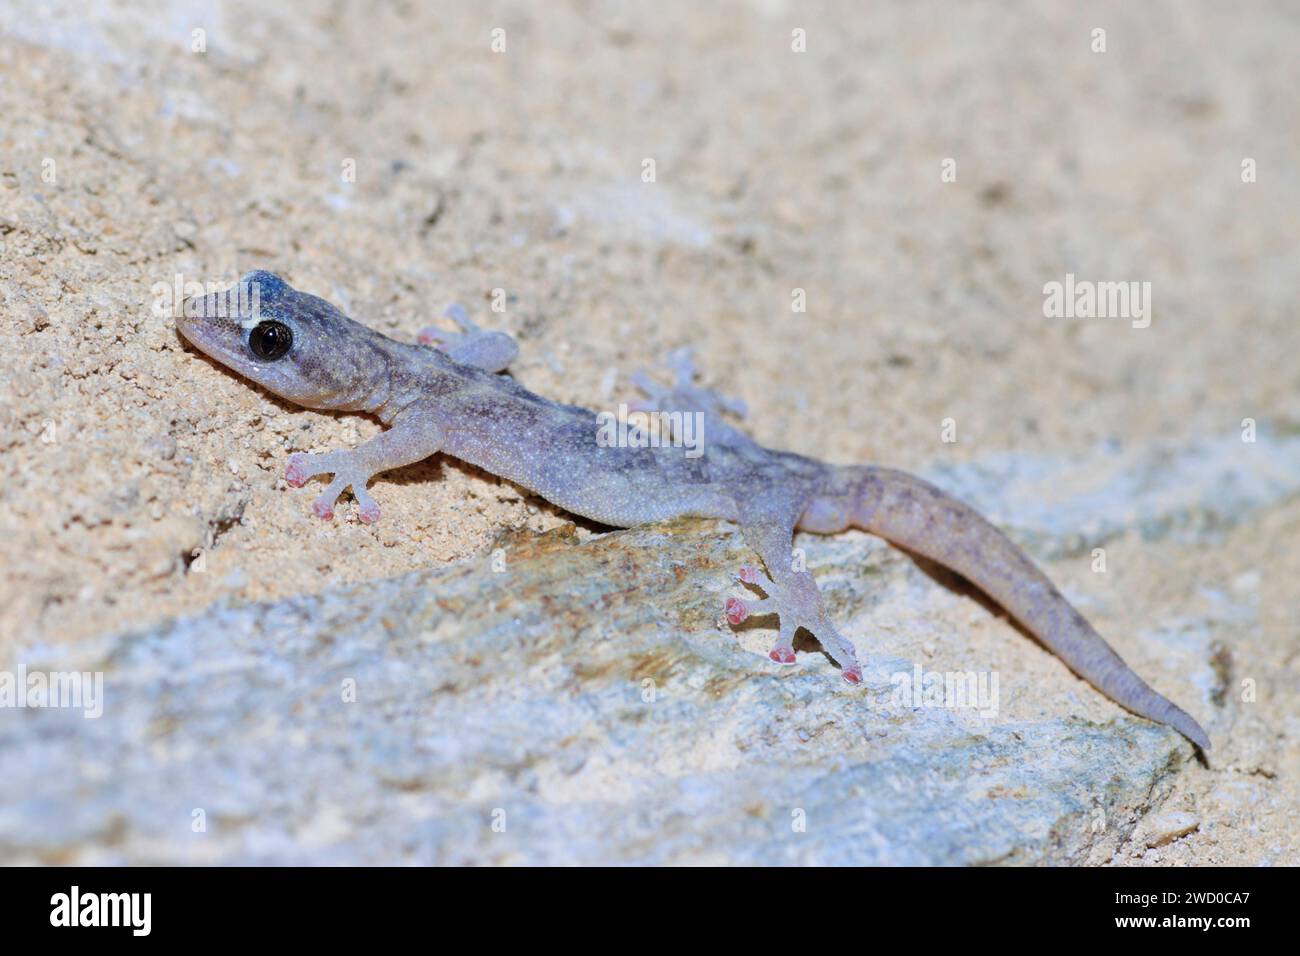 European leaf-toed gecko (Phyllodactylus europaeus, Euleptes europaea), on sandy dry ground, side view, France, Port-Cros Stock Photo